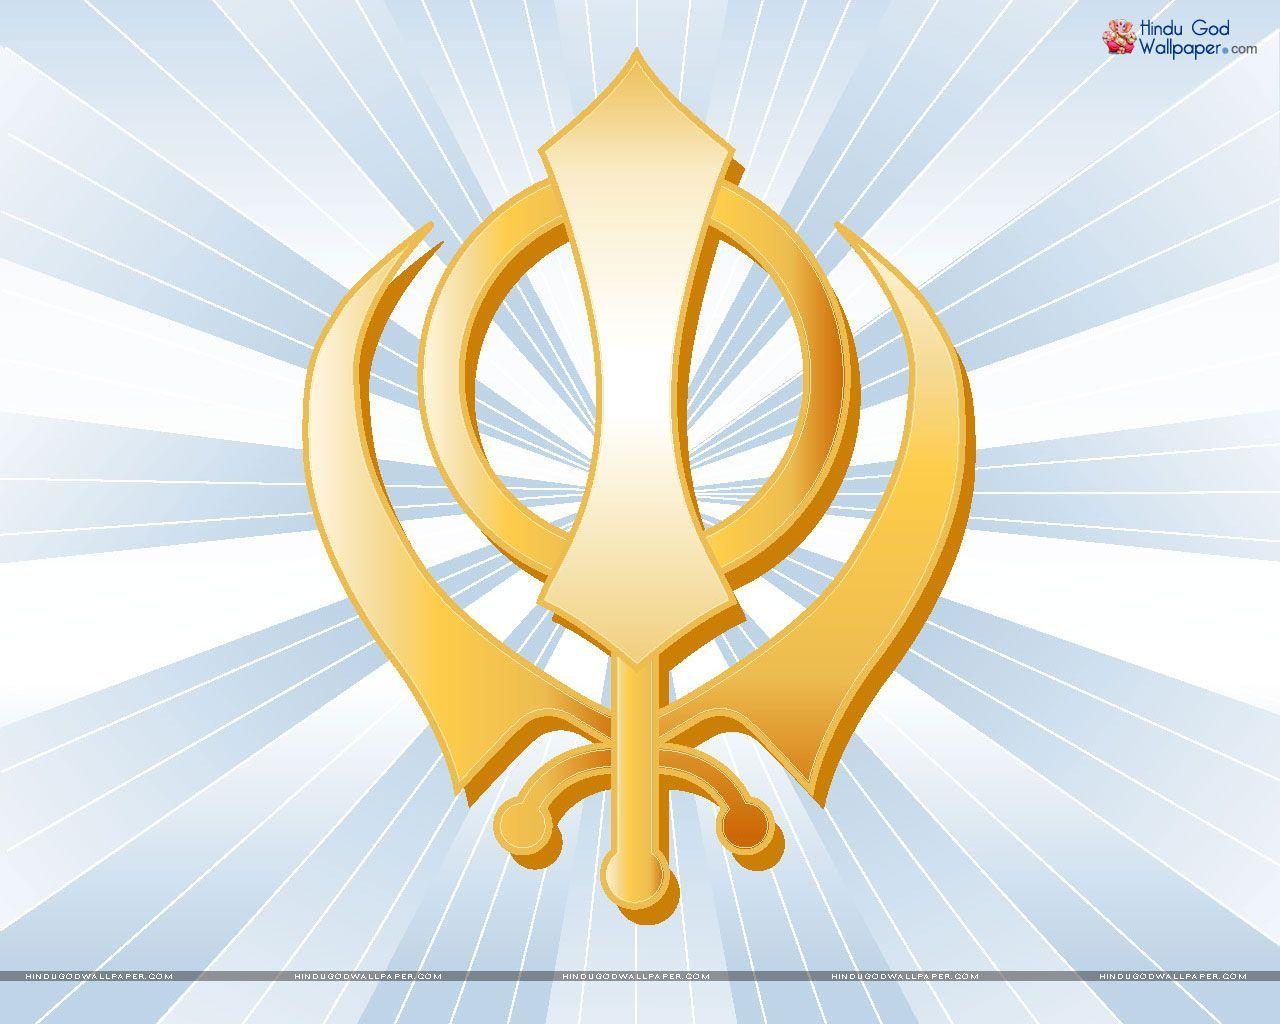 Sikhism Logo - Sikh Symbol Wallpaper | Sikh Logo Wallpaper Download | Guru Nanak ...